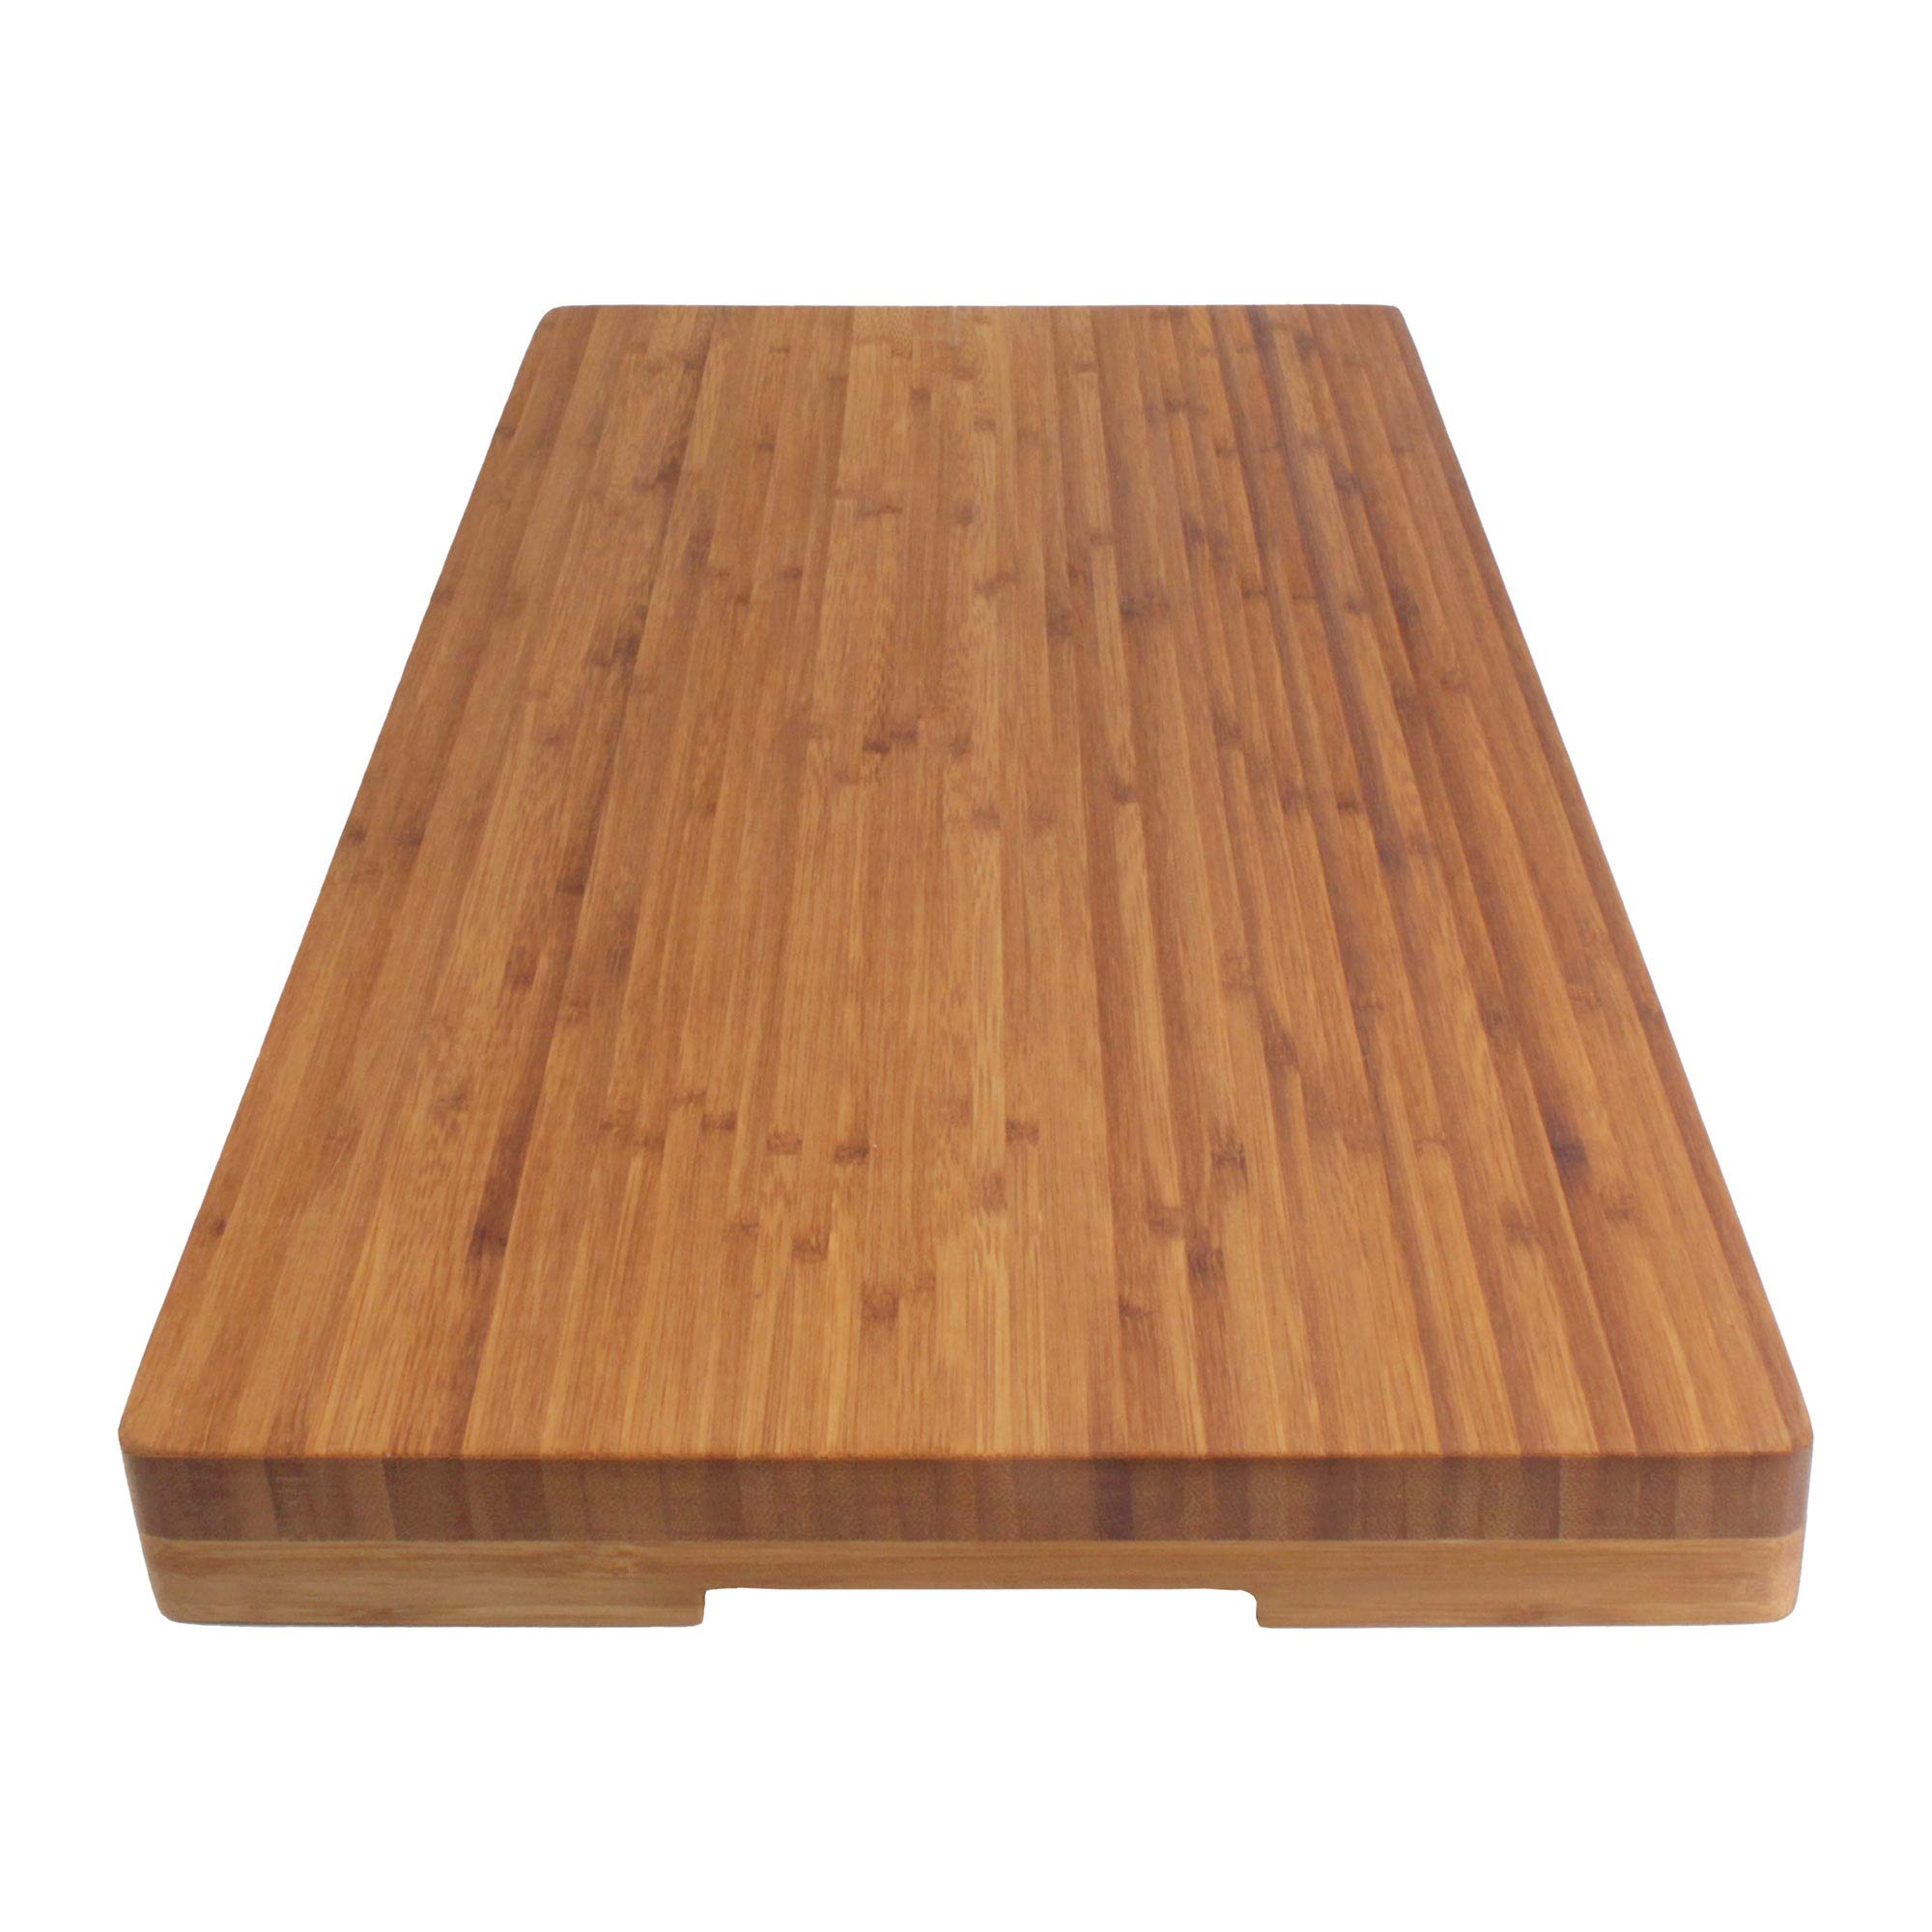 BambooMN Bamboo Range Burner cover cutting Board, New Vertical cut, Extra Large (24.7x12x1.5)